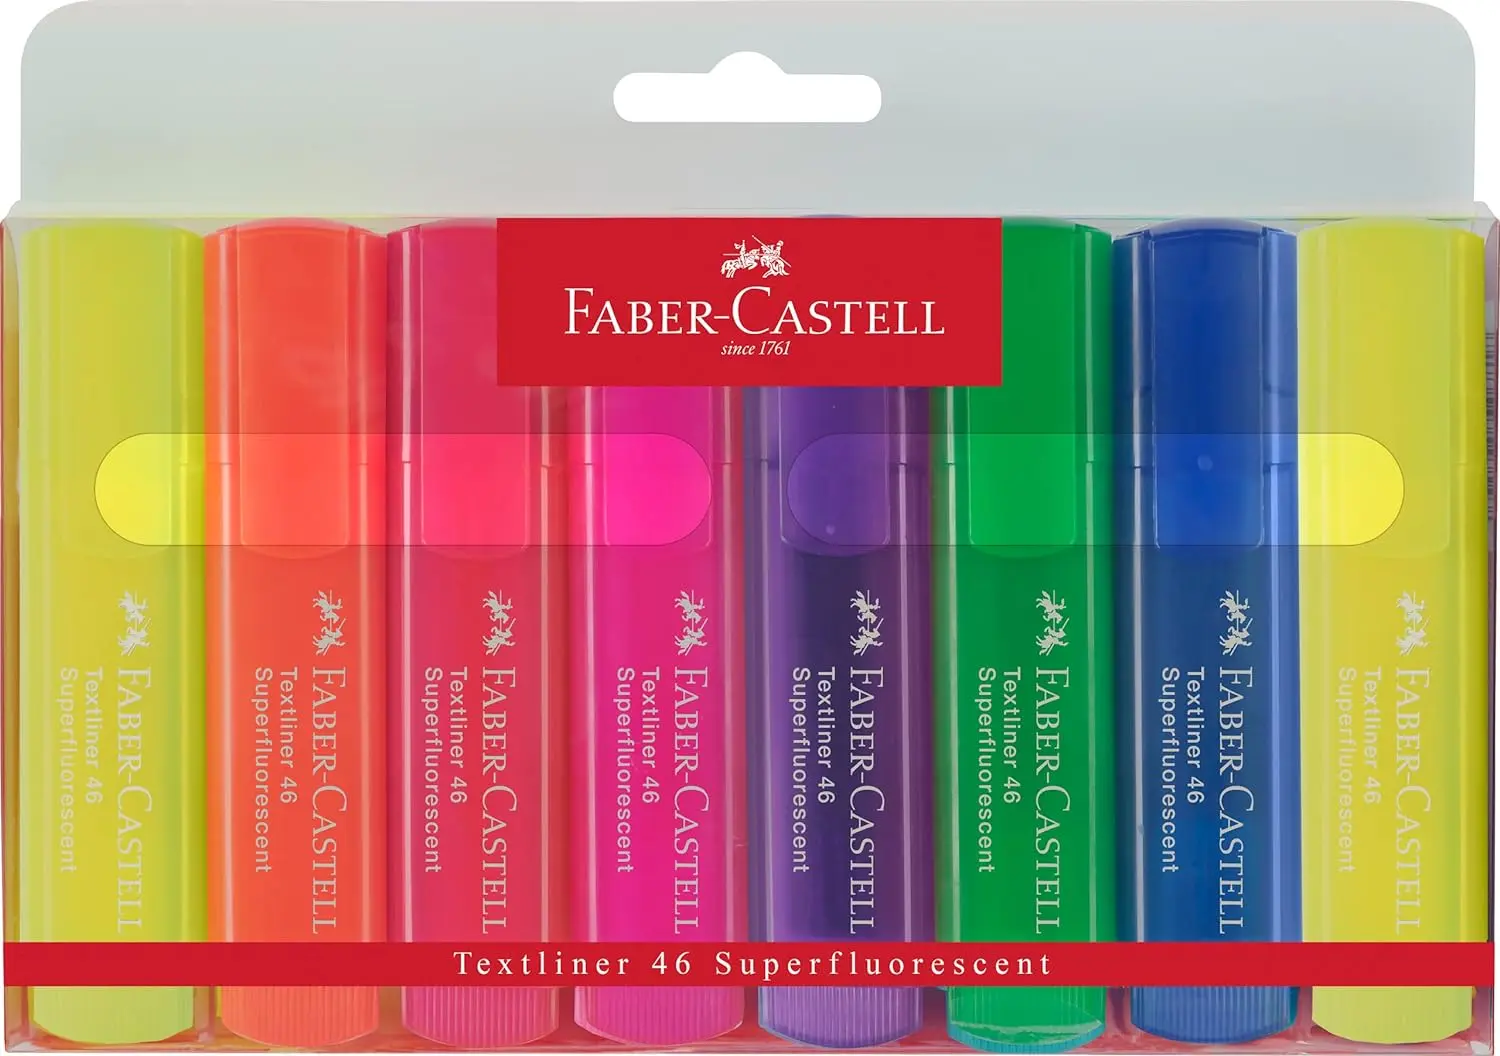 Faber-Castell Textliner 46 Superfluorescente Pack de 8 Marcadores Fluorescentes - Punta Biselada - T